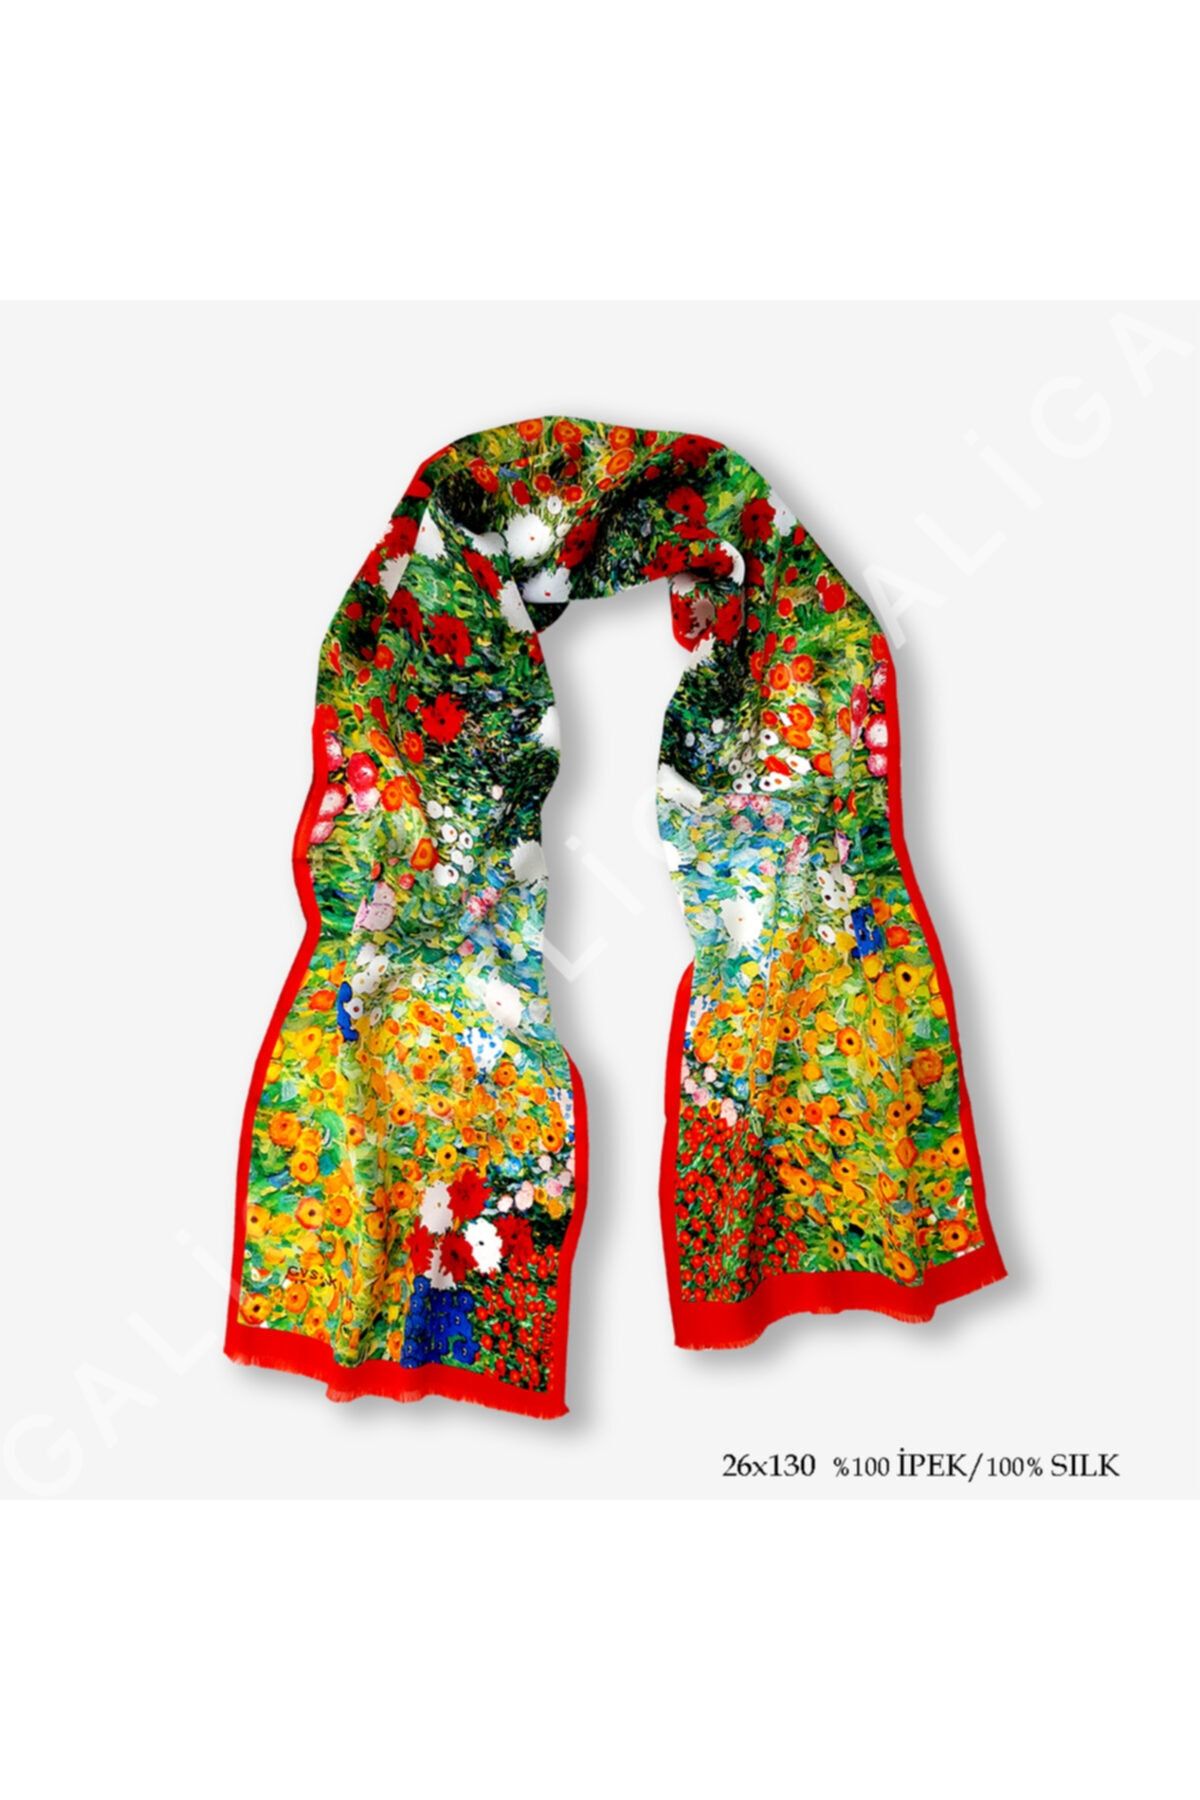 Galiga Klimt Flowers %100 Ipek Fular 26*130cm 'art On Silk'